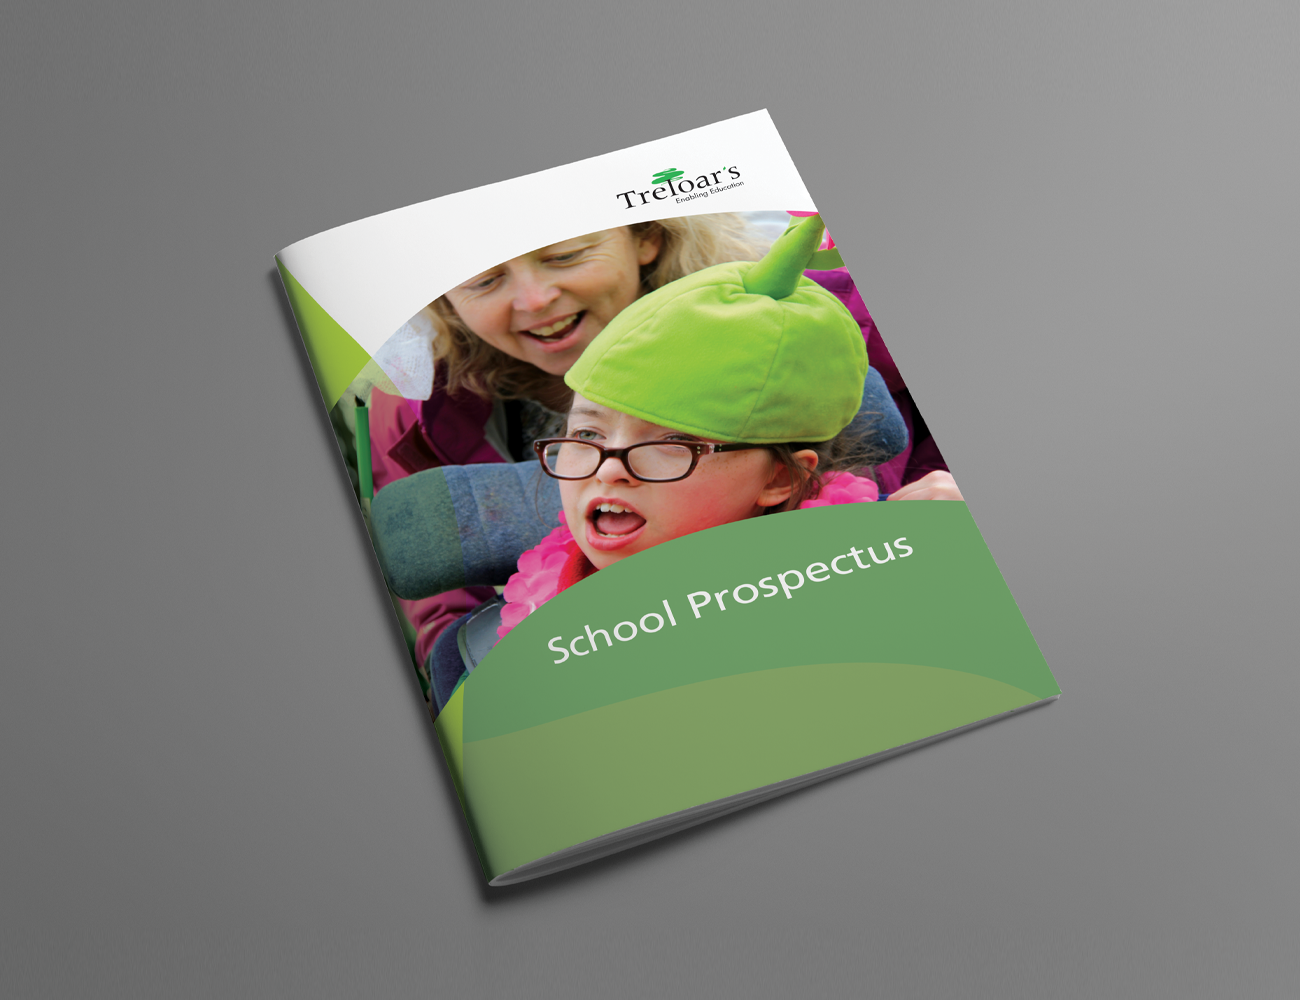 School prospectus for Treloar's by Steve Davies graphic designer